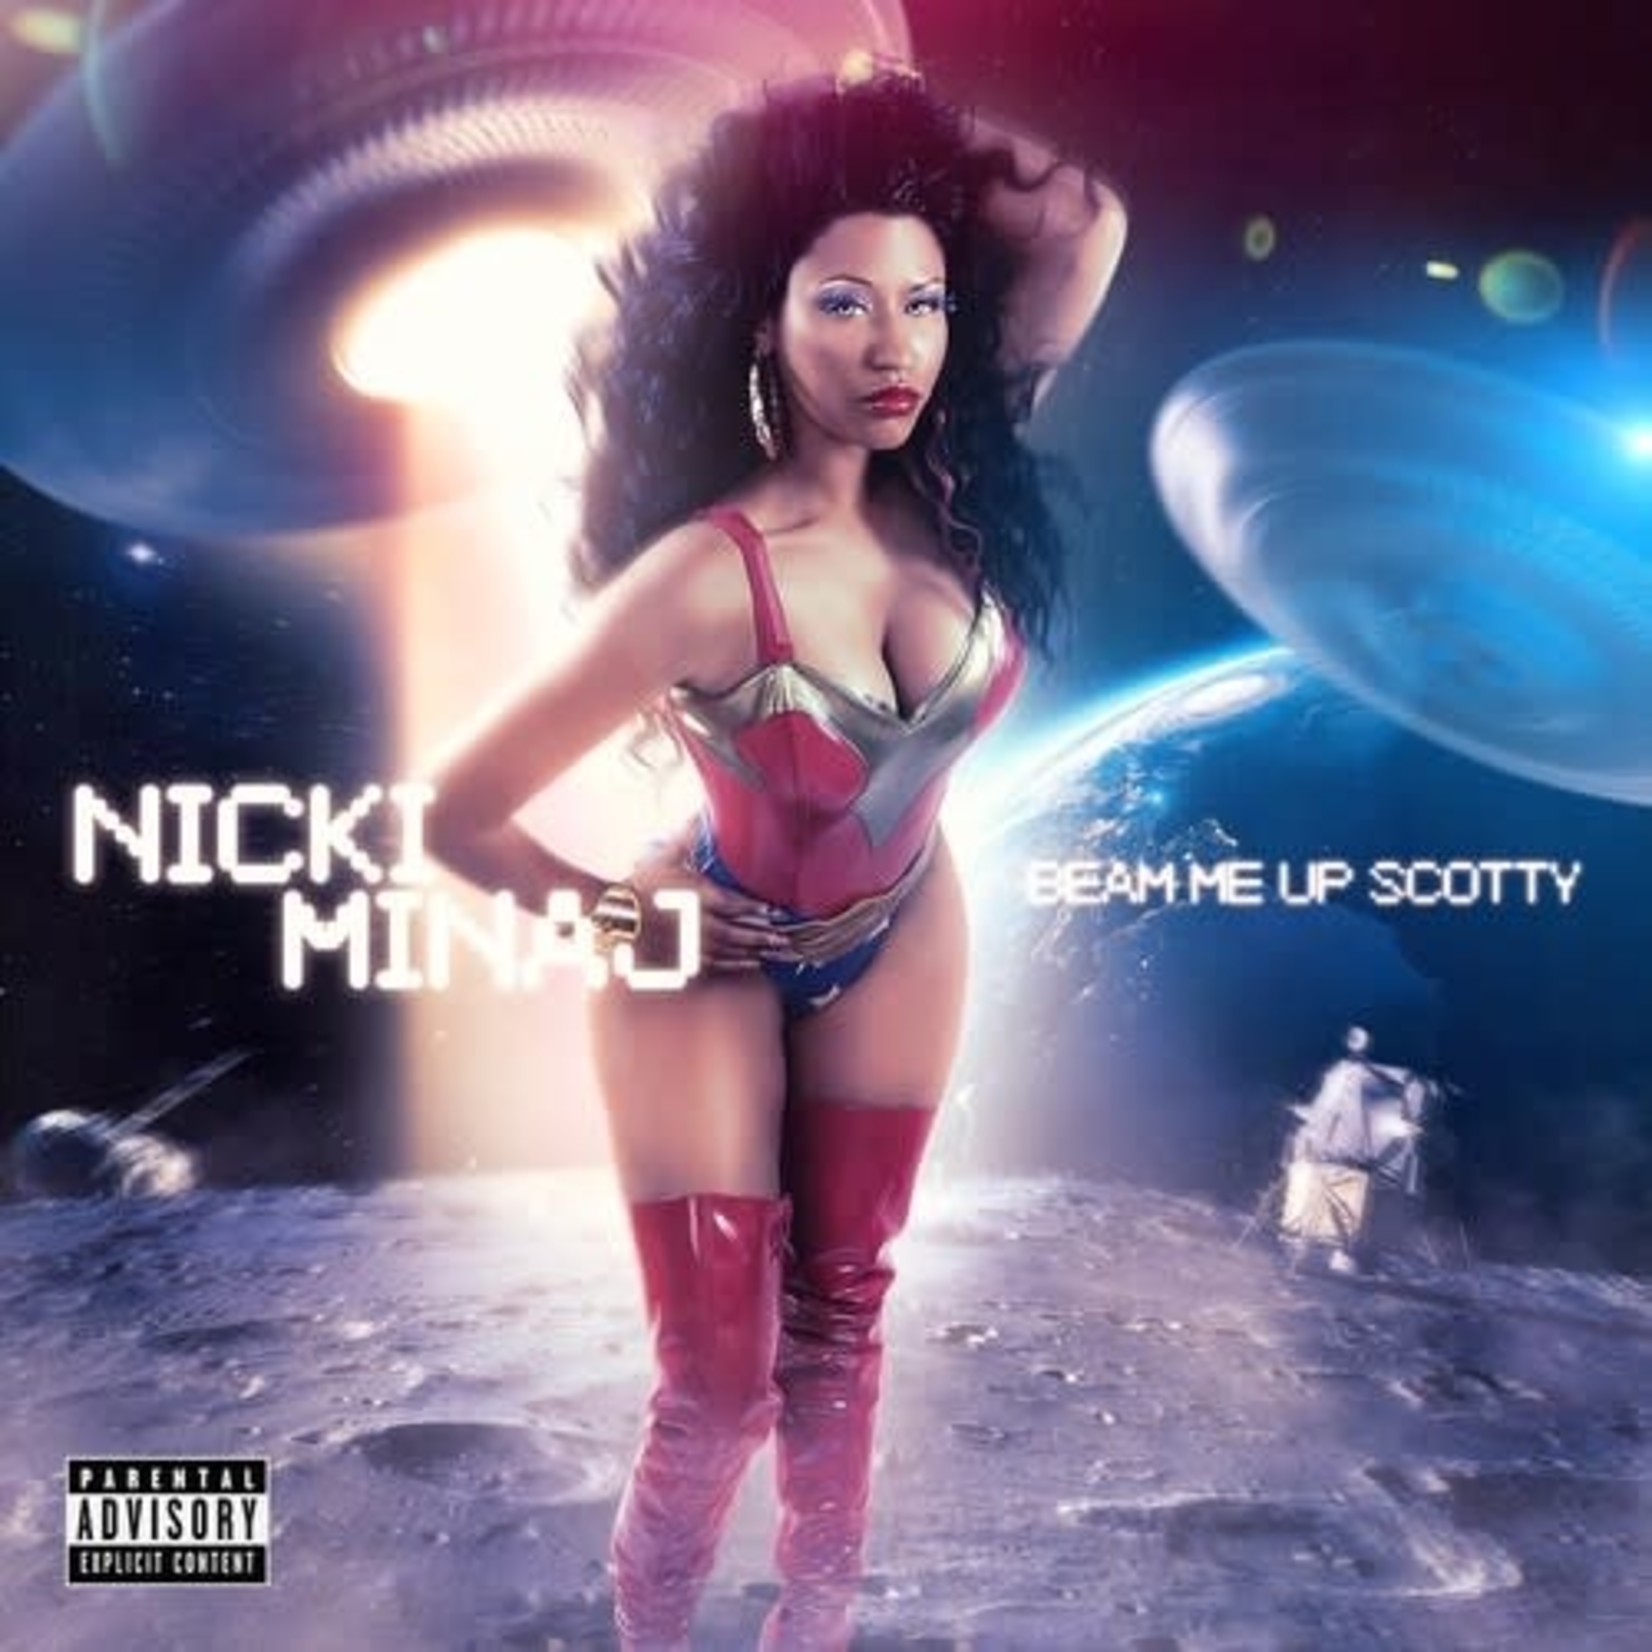 Nicki Minaj - Beam Me Up Scotty [USED CD]